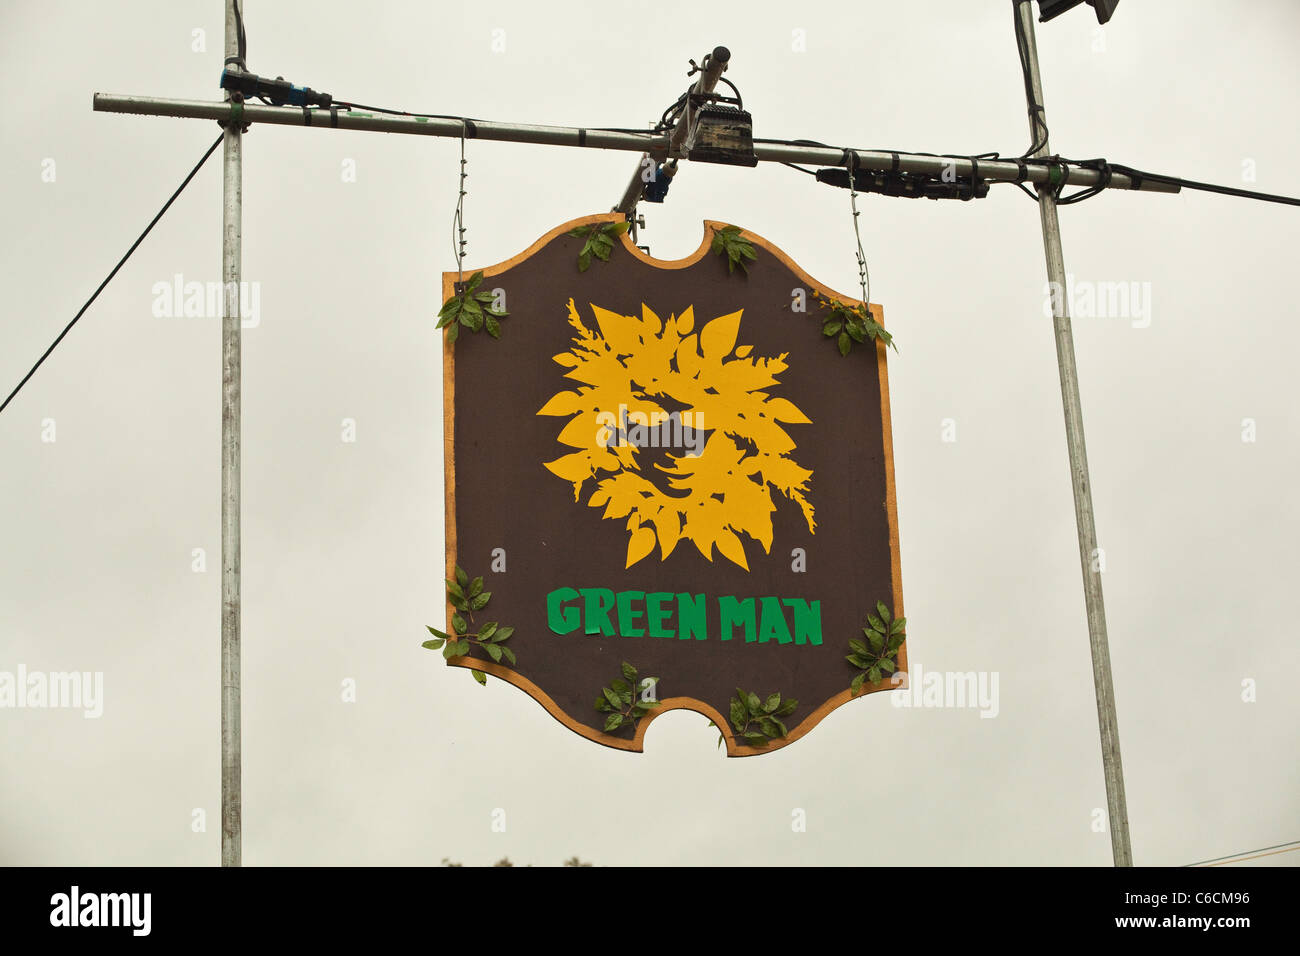 Green man Festival pub sign, Glanusk Park, Wales, U.K Stock Photo